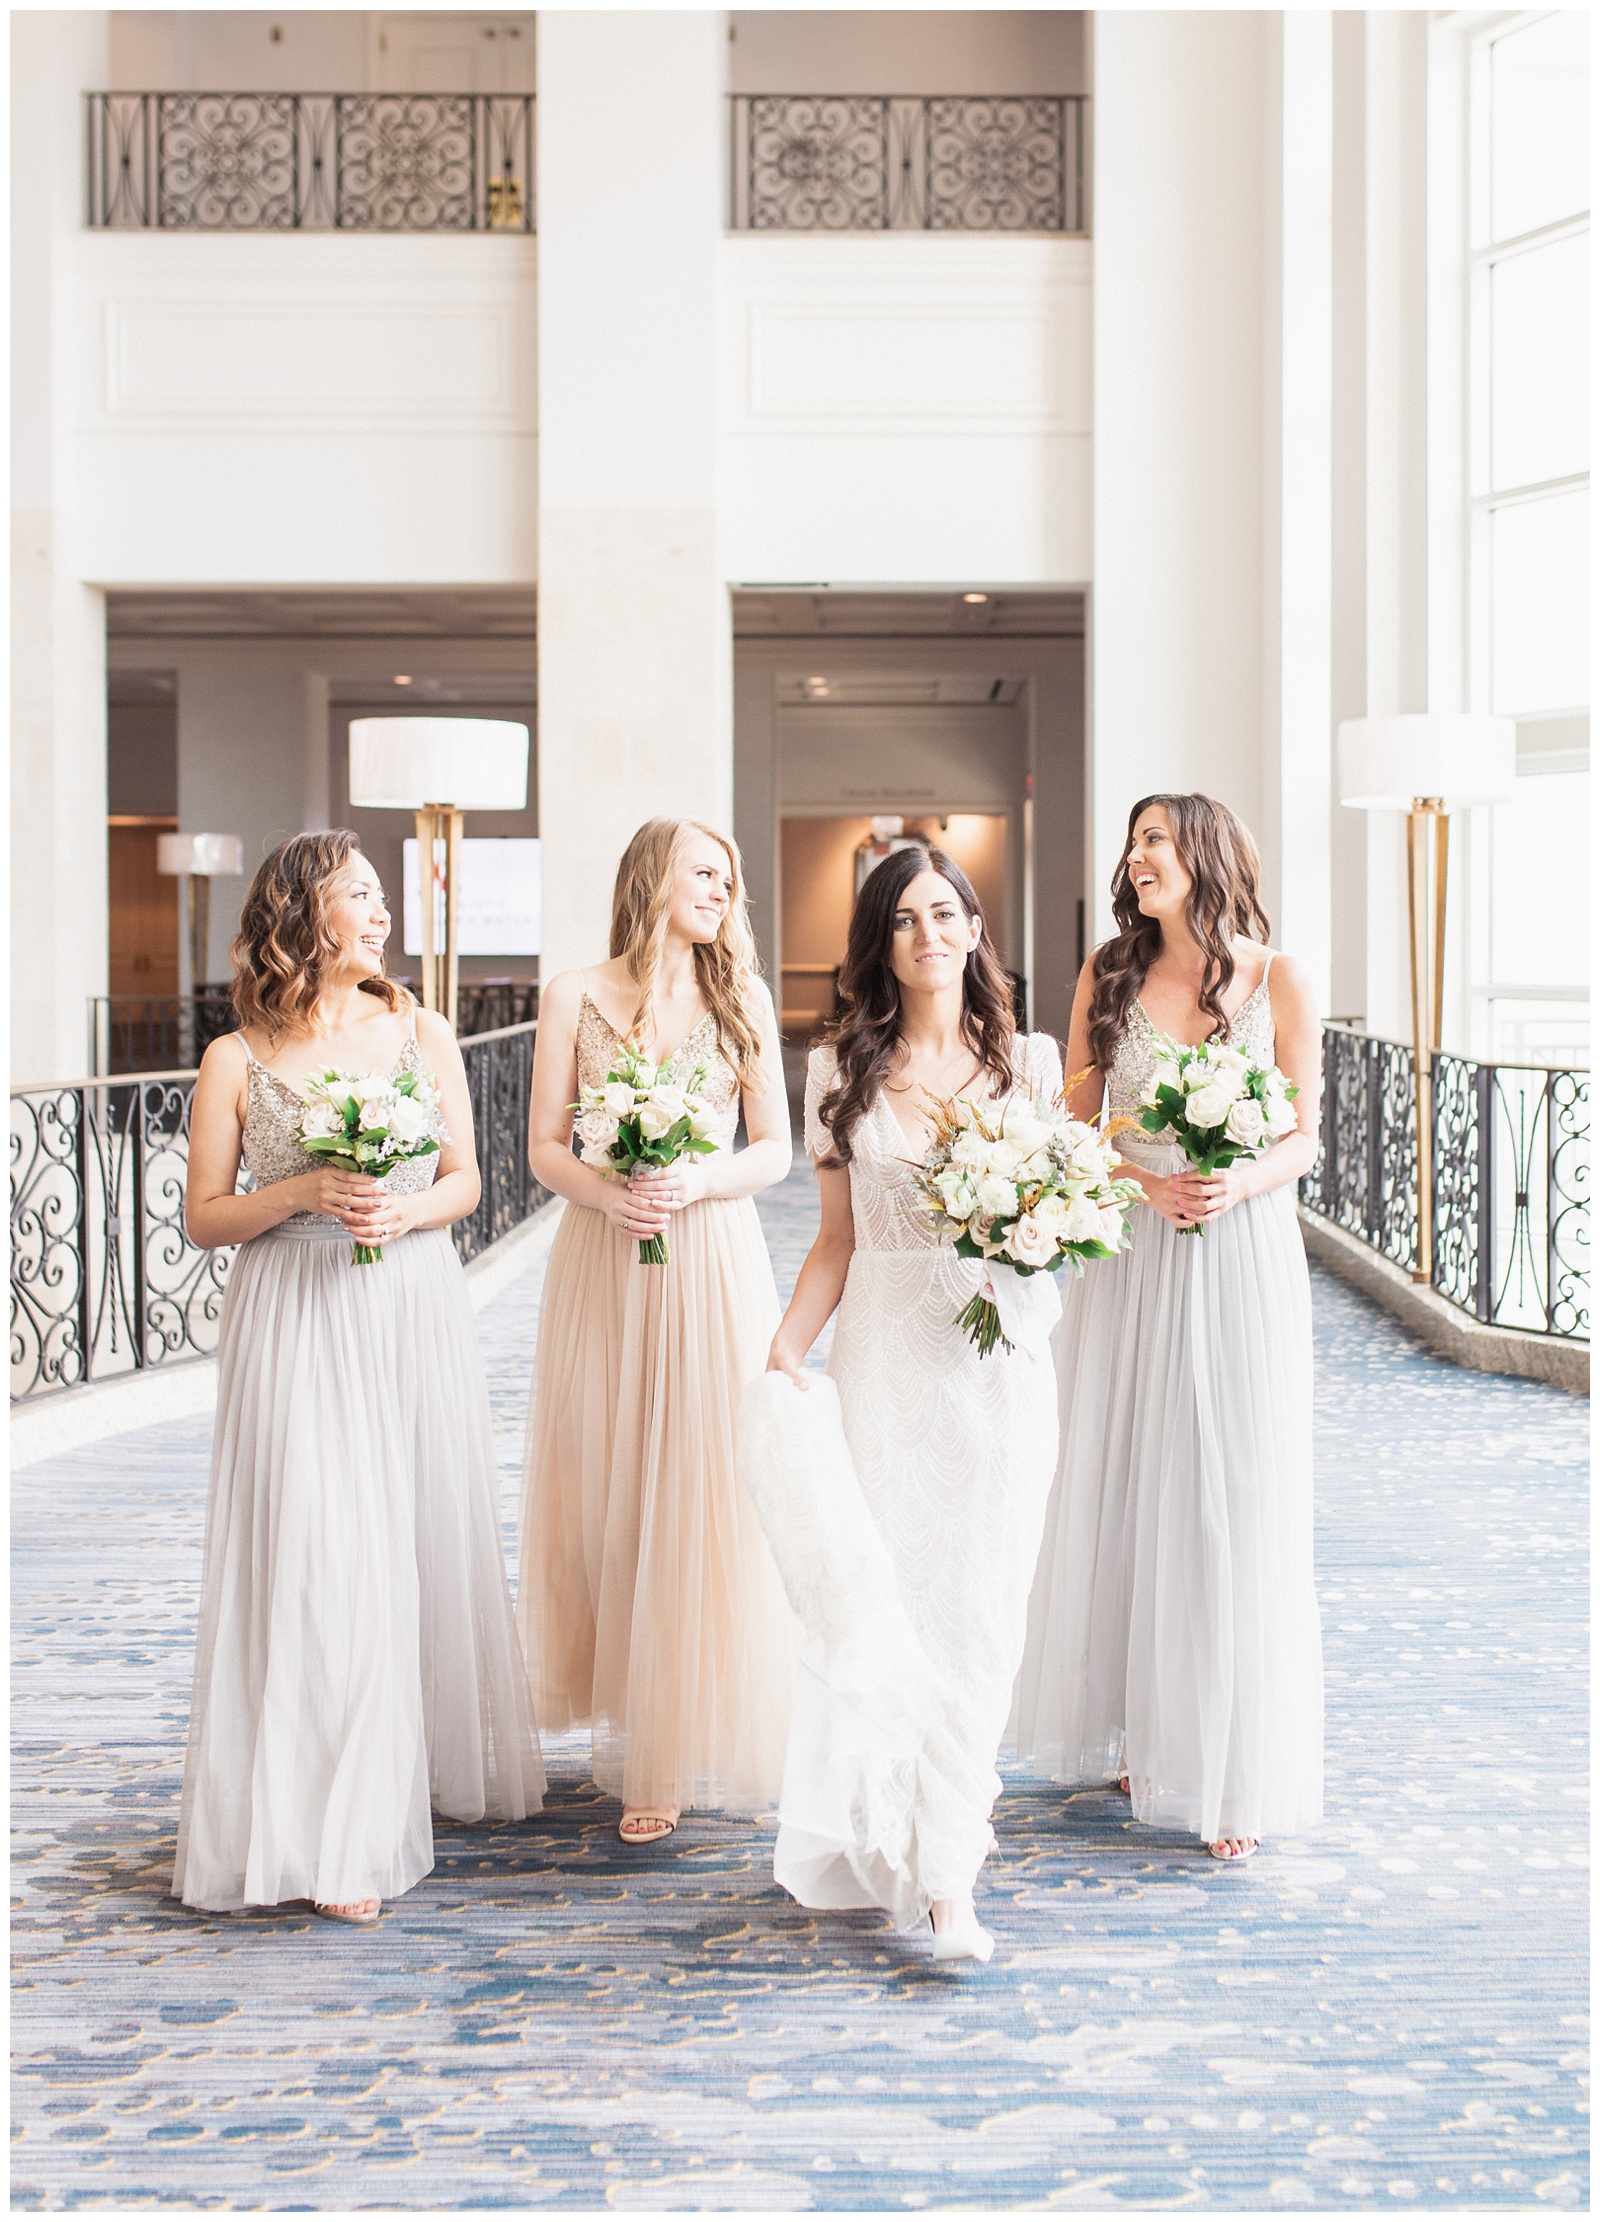 Bride walking with bridesmaids | Matlock and Kelly Photography